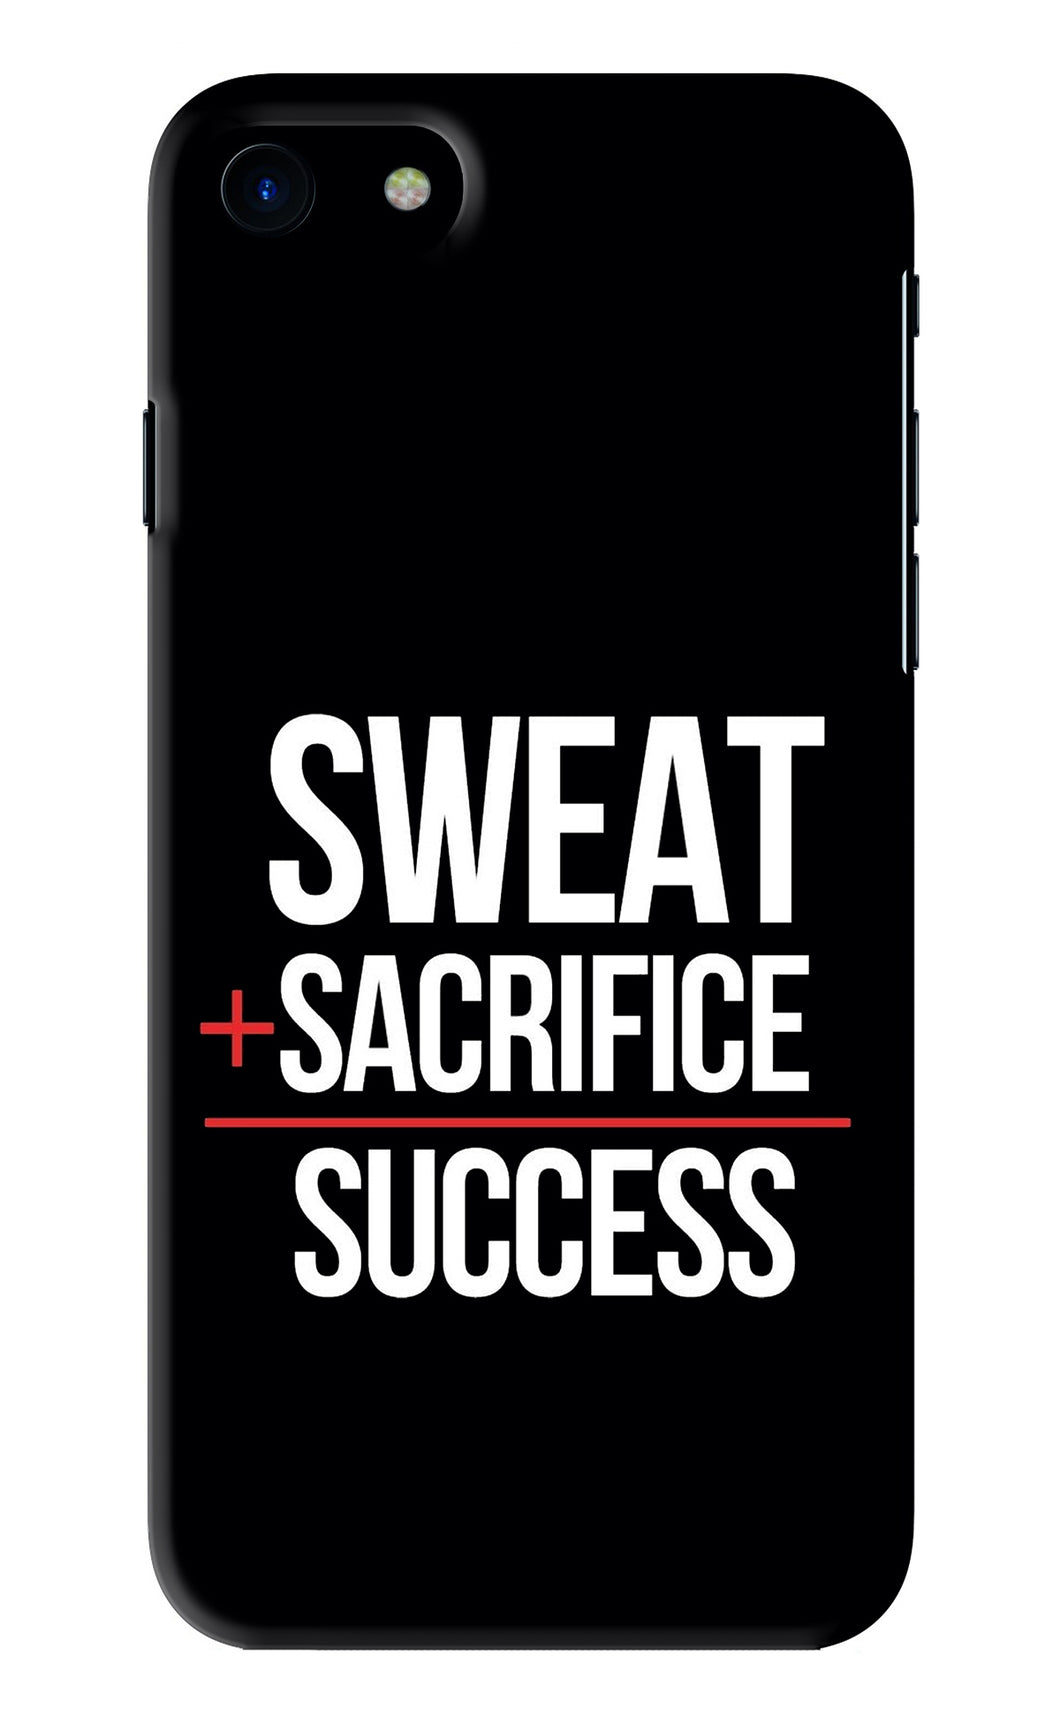 Sweat Sacrifice Success iPhone 8 Back Skin Wrap